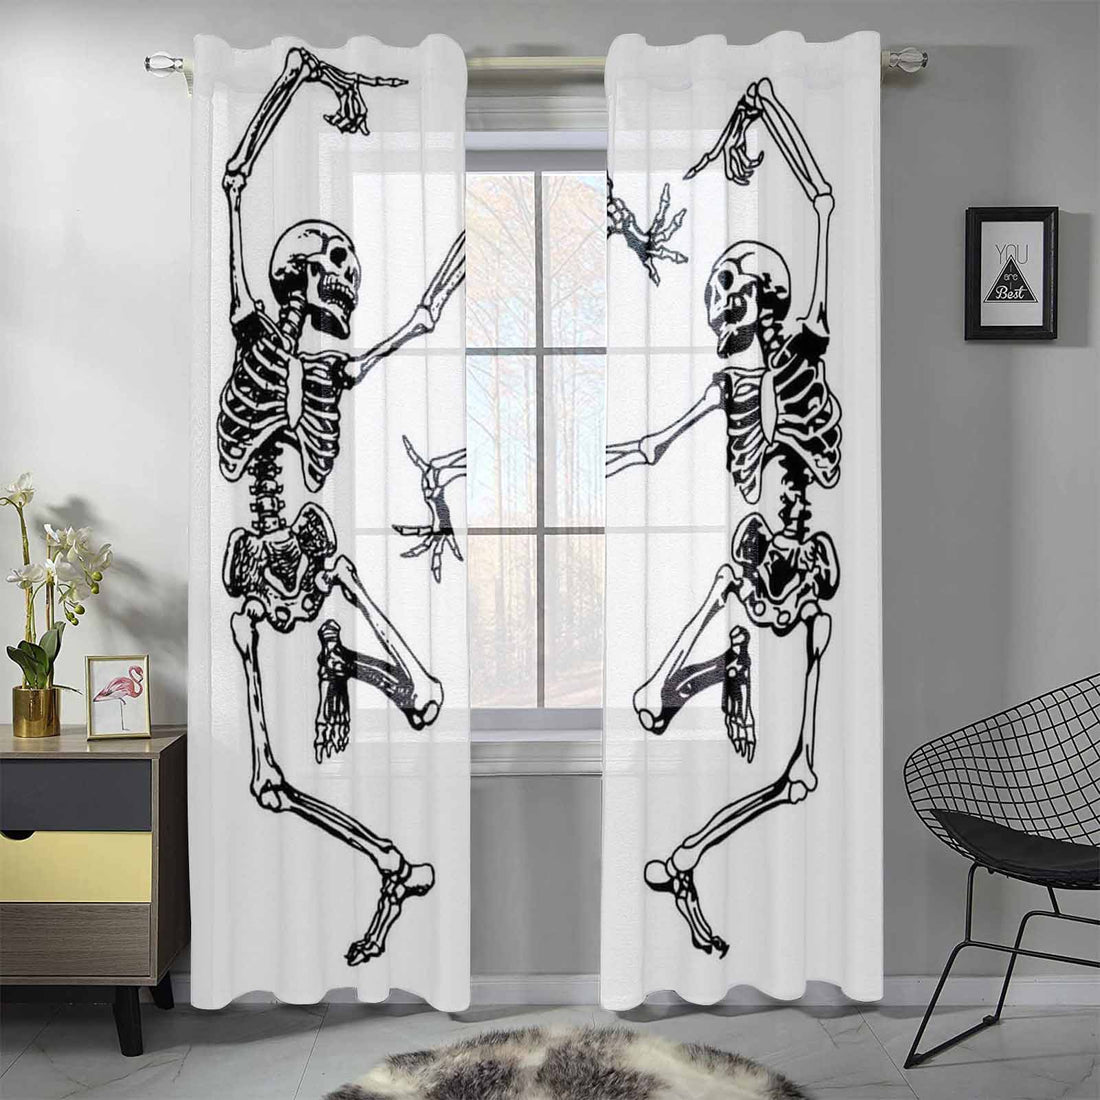 Kate McEnroe New York Sheer 2 - Panel Window Curtains in Monochrome Dancing SkeletonsWindow CurtainsDG1169993DXH7857D